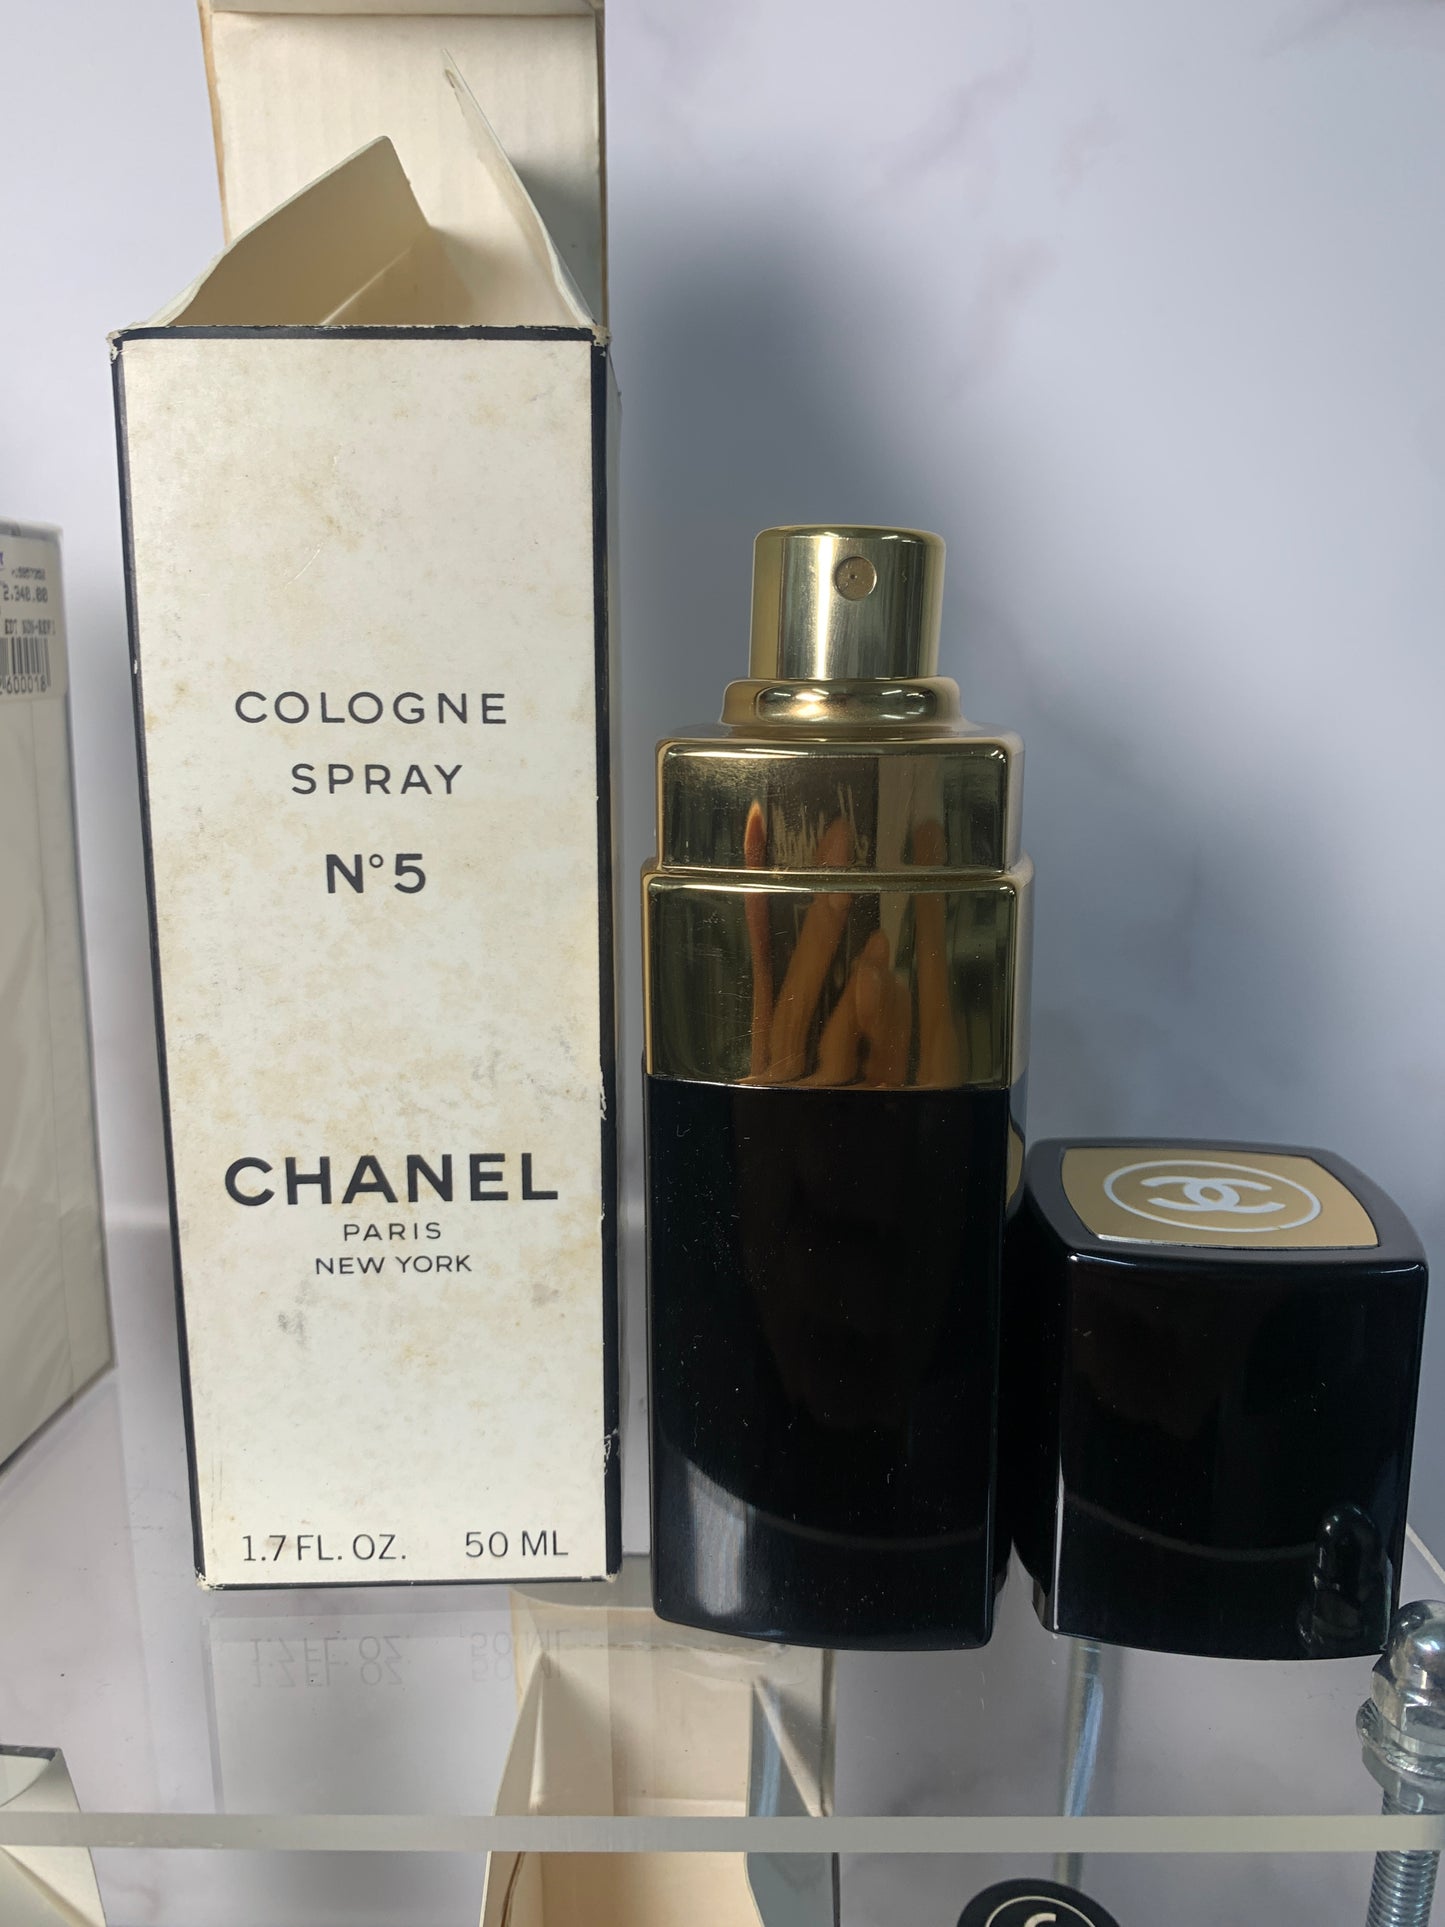 Chanel No. 5 Eau de Toilette EDT EDC EDP 100ml 50ml  Soap Savon 150g 75g - 221123